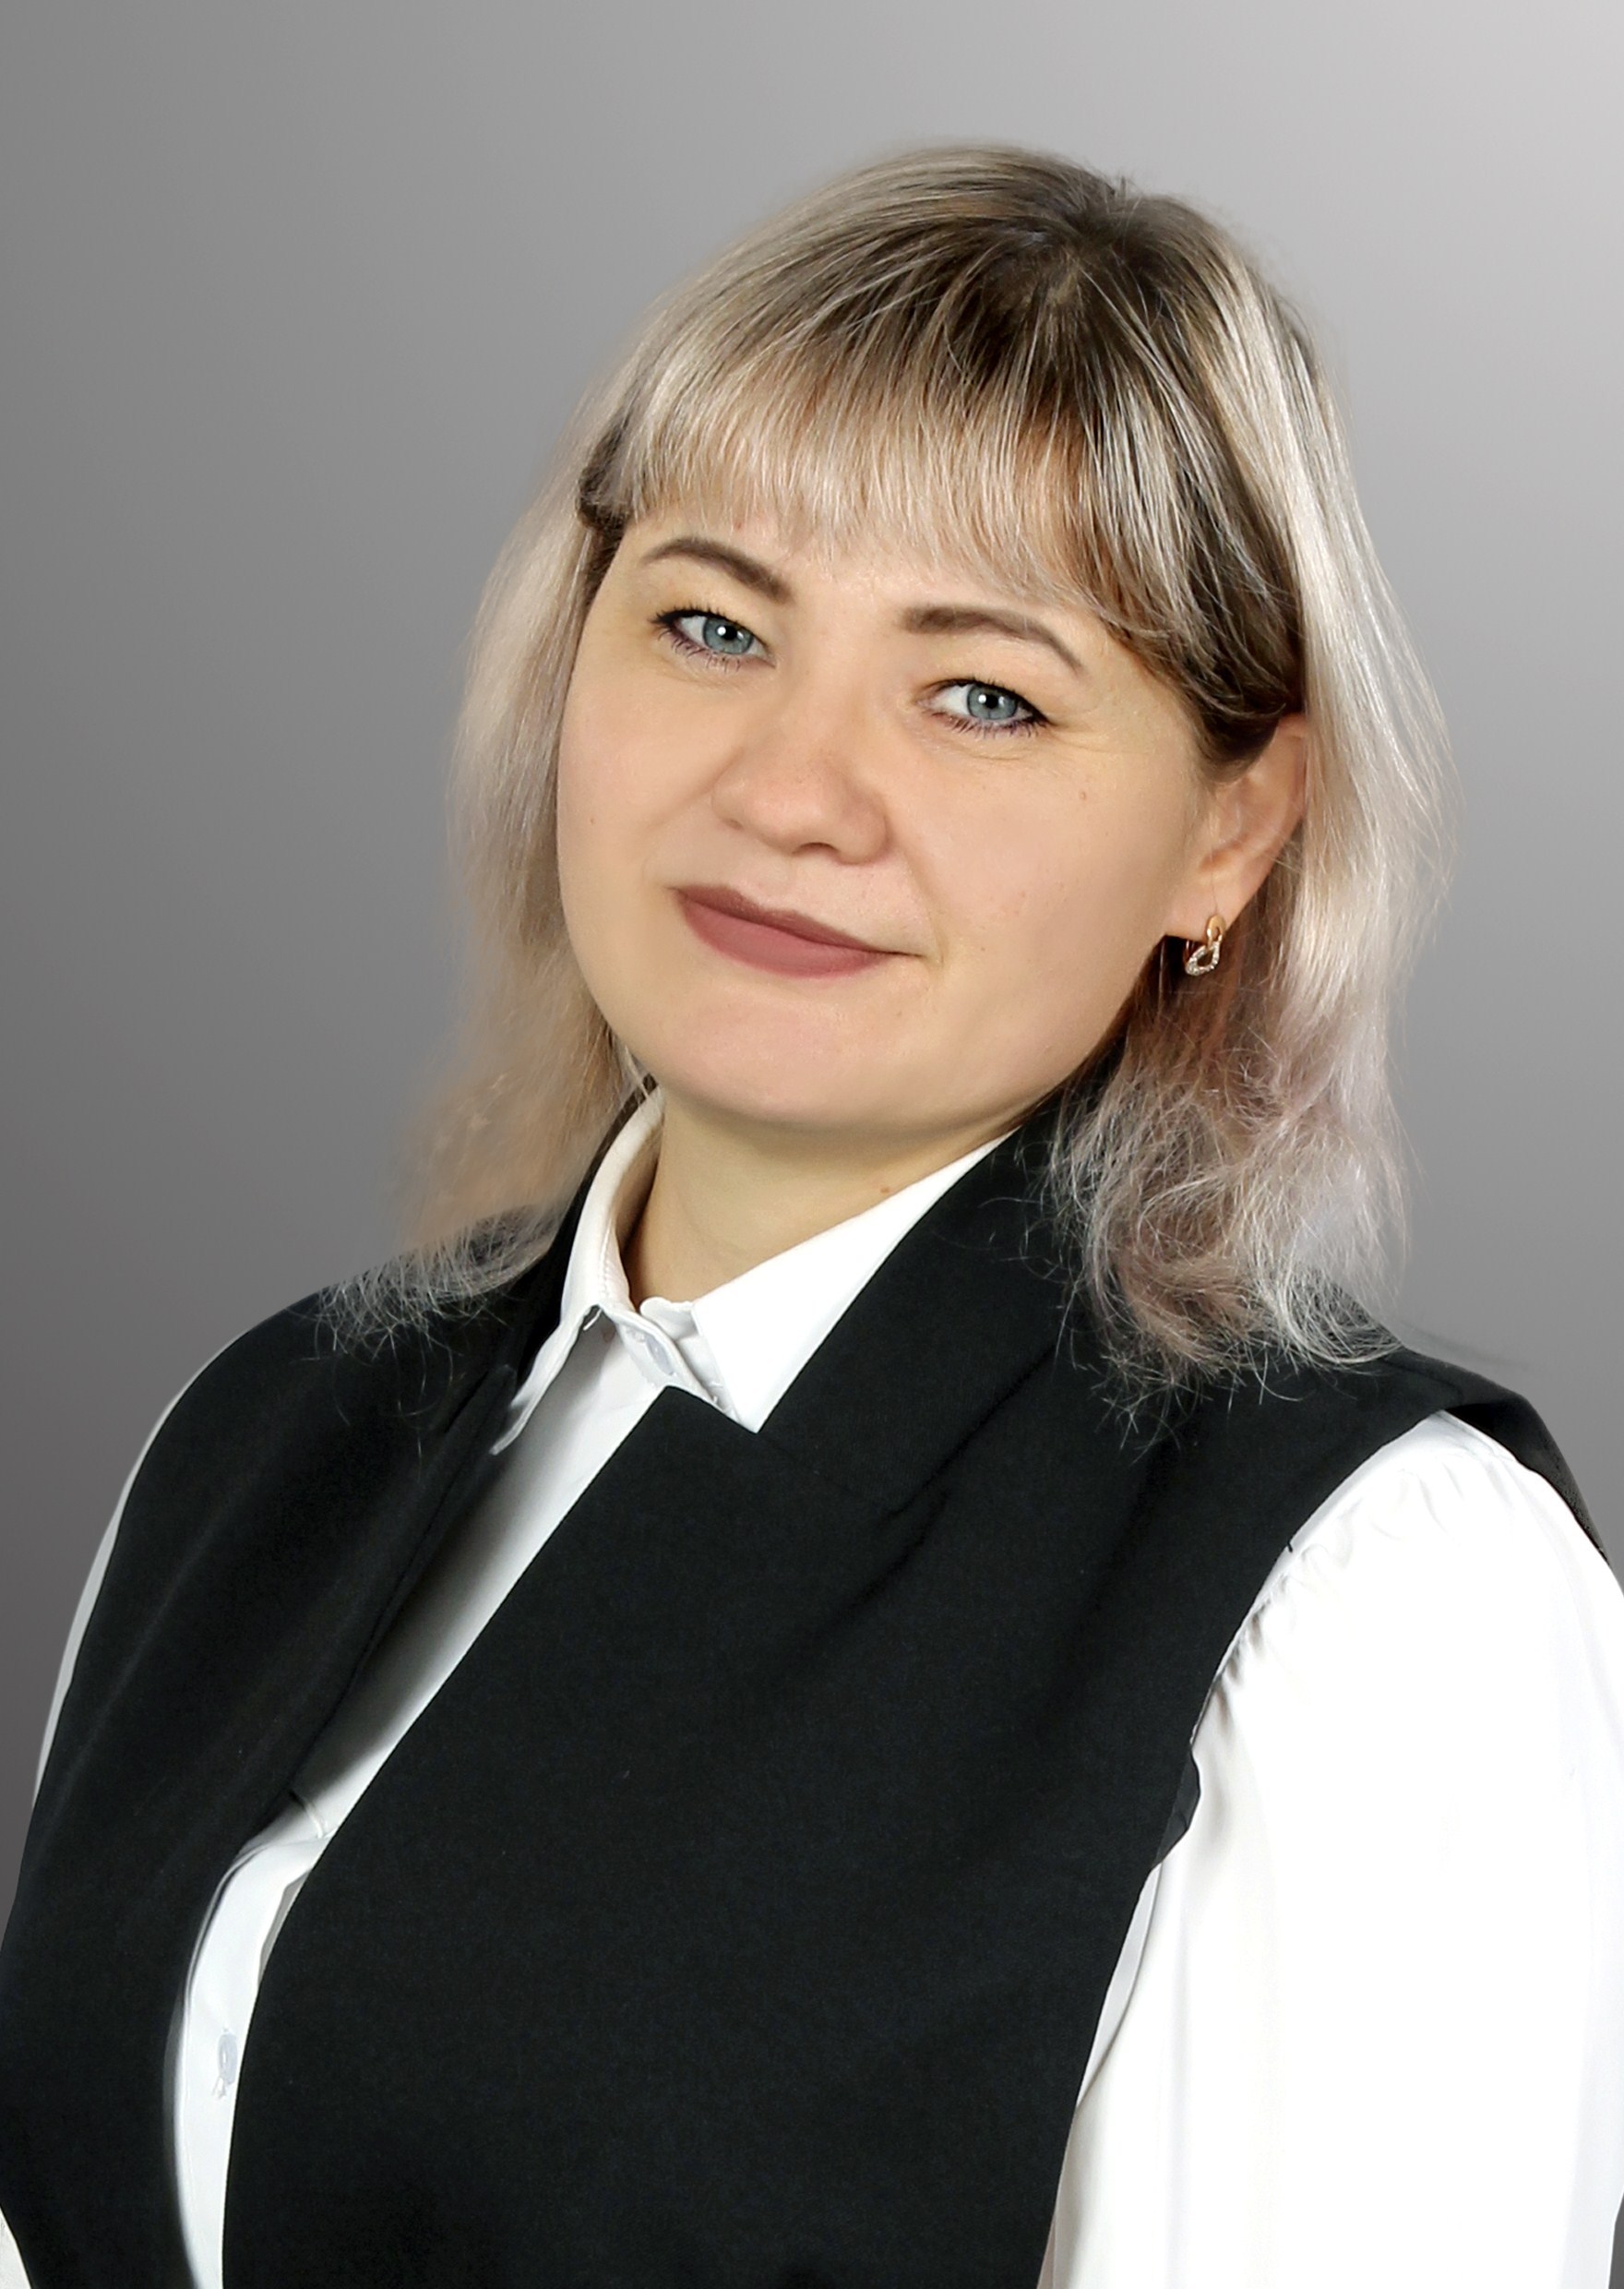 Горочная Светлана Владиславовна.